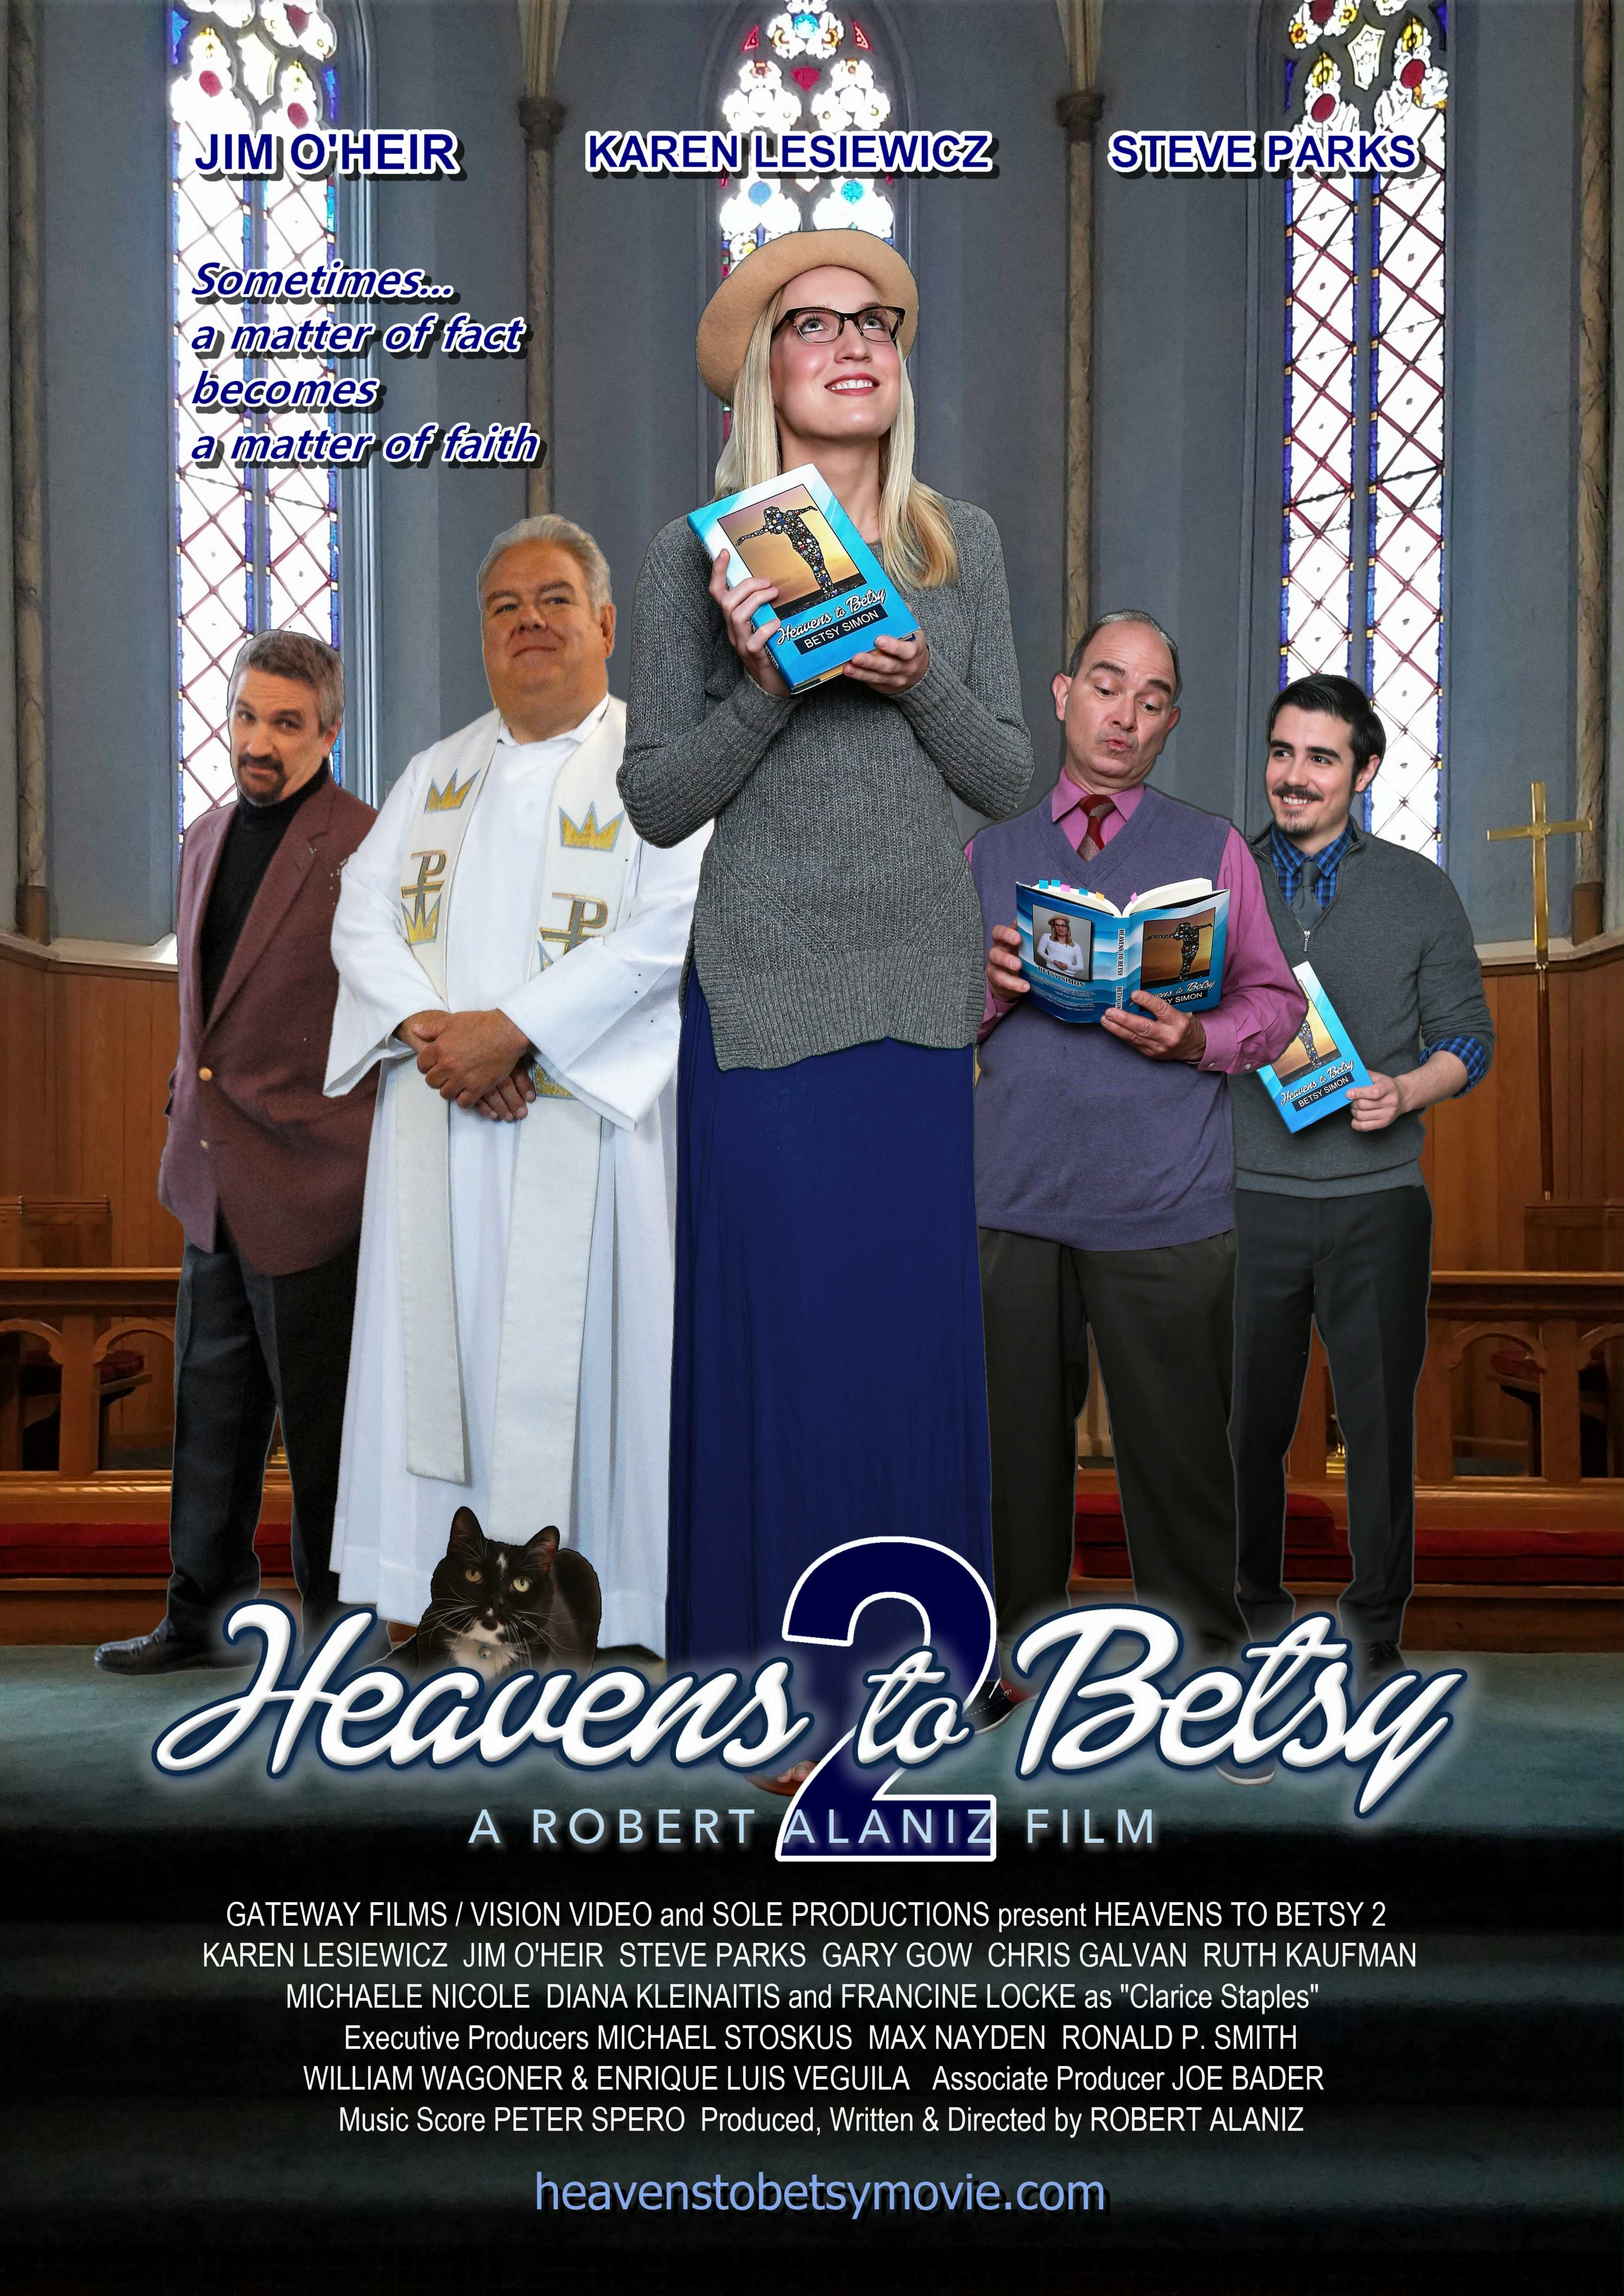 Nonton film Heavens to Betsy 2 layarkaca21 indoxx1 ganool online streaming terbaru